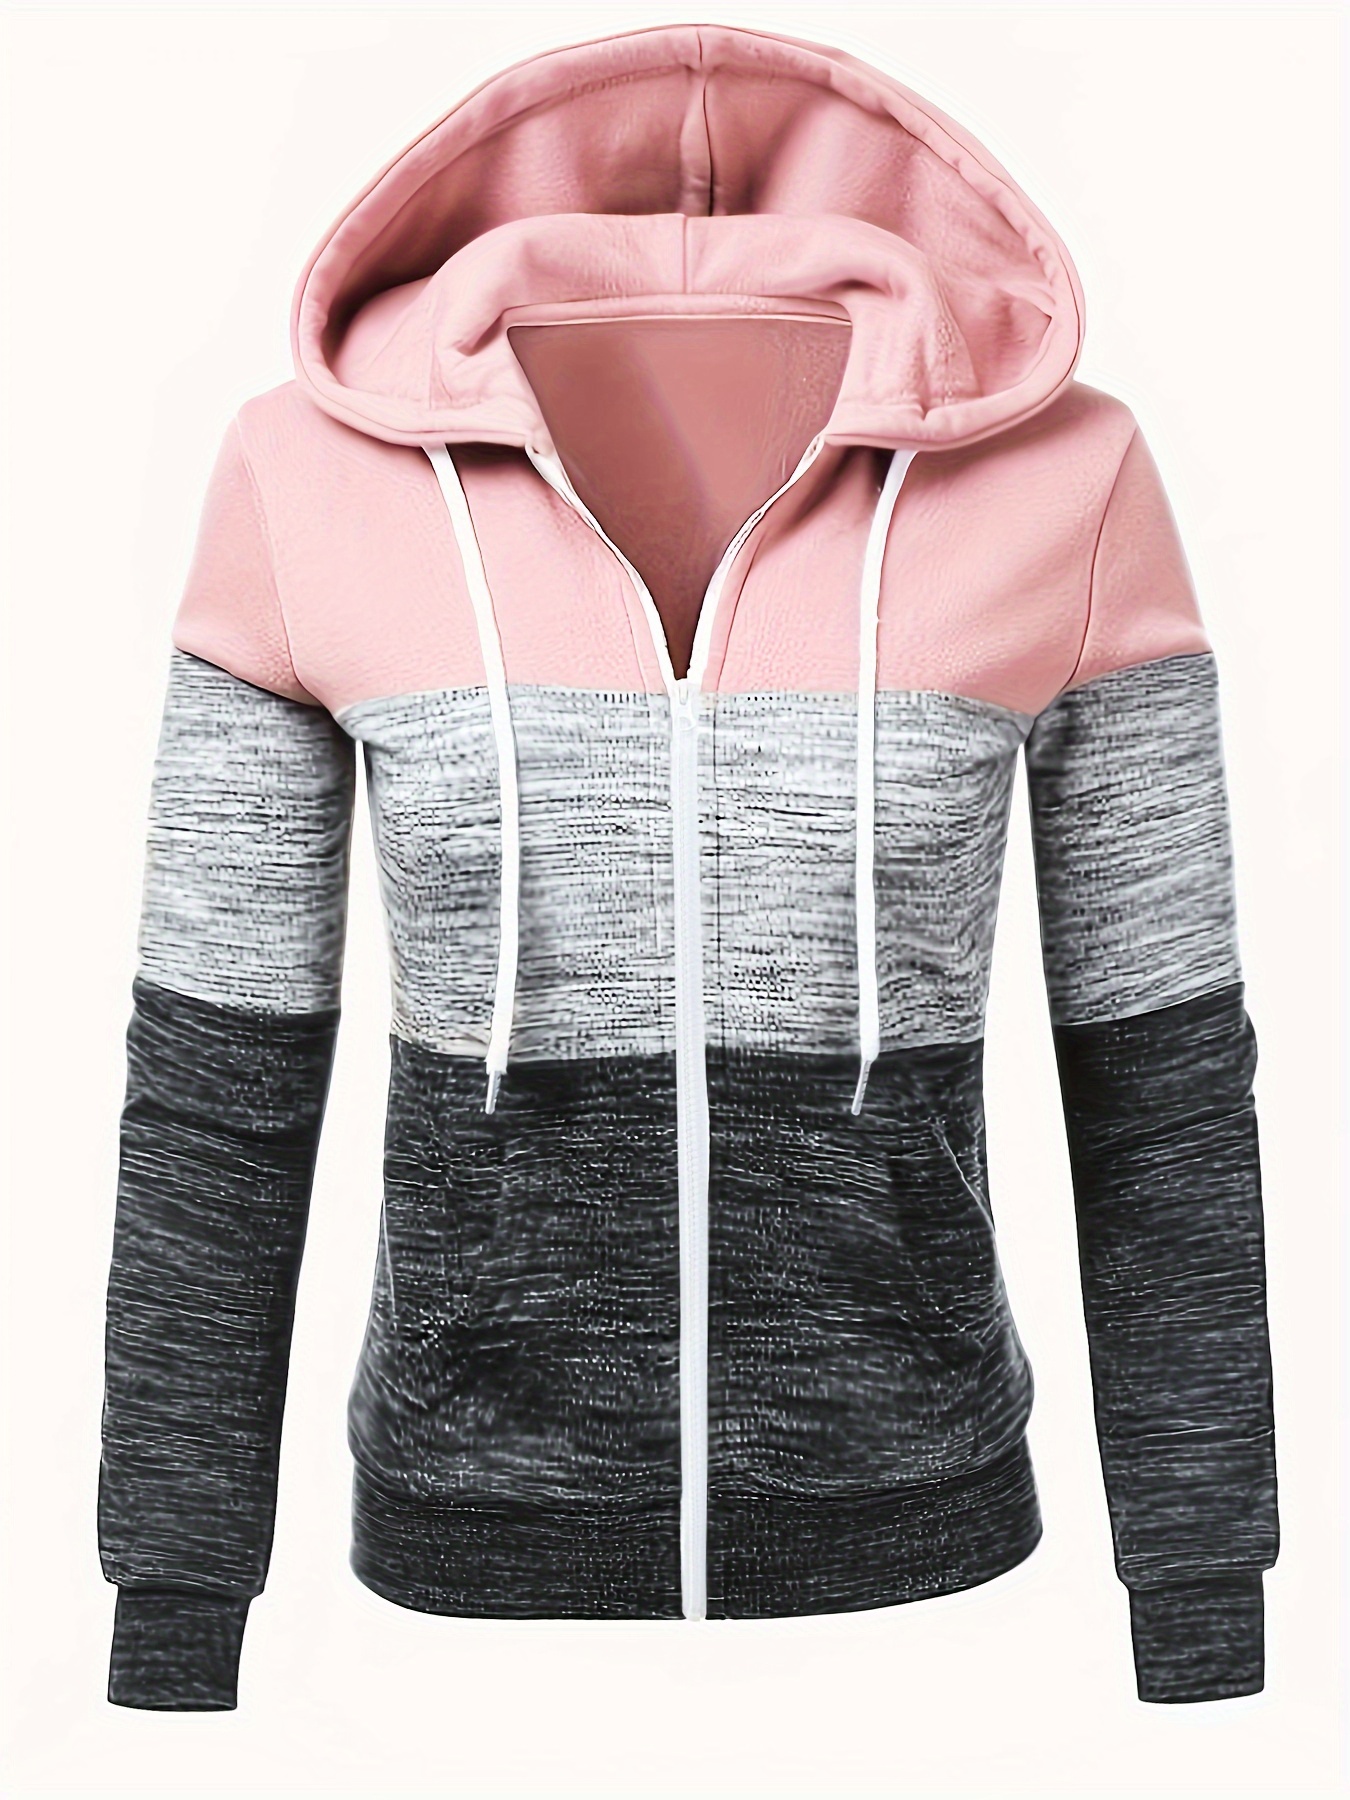 Color Block Zipper Hoodies, Casual Long Sleeve Drawstring Sweatshirt For Fall, Women's Clothing